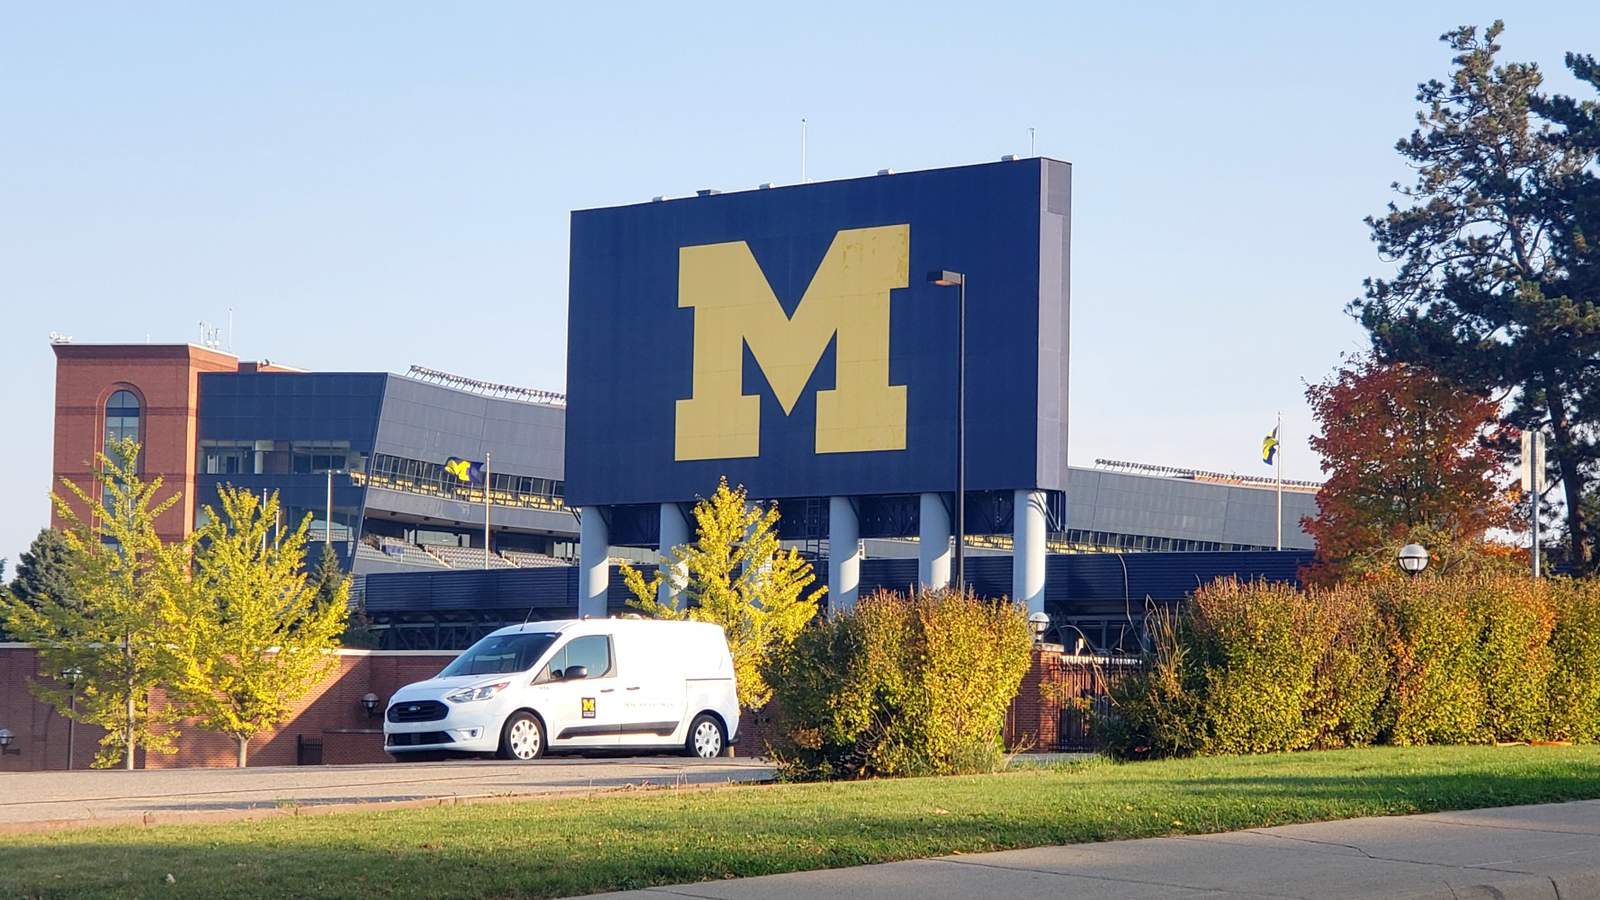 Fall undergraduate enrollment at University of Michigan steady, officials say